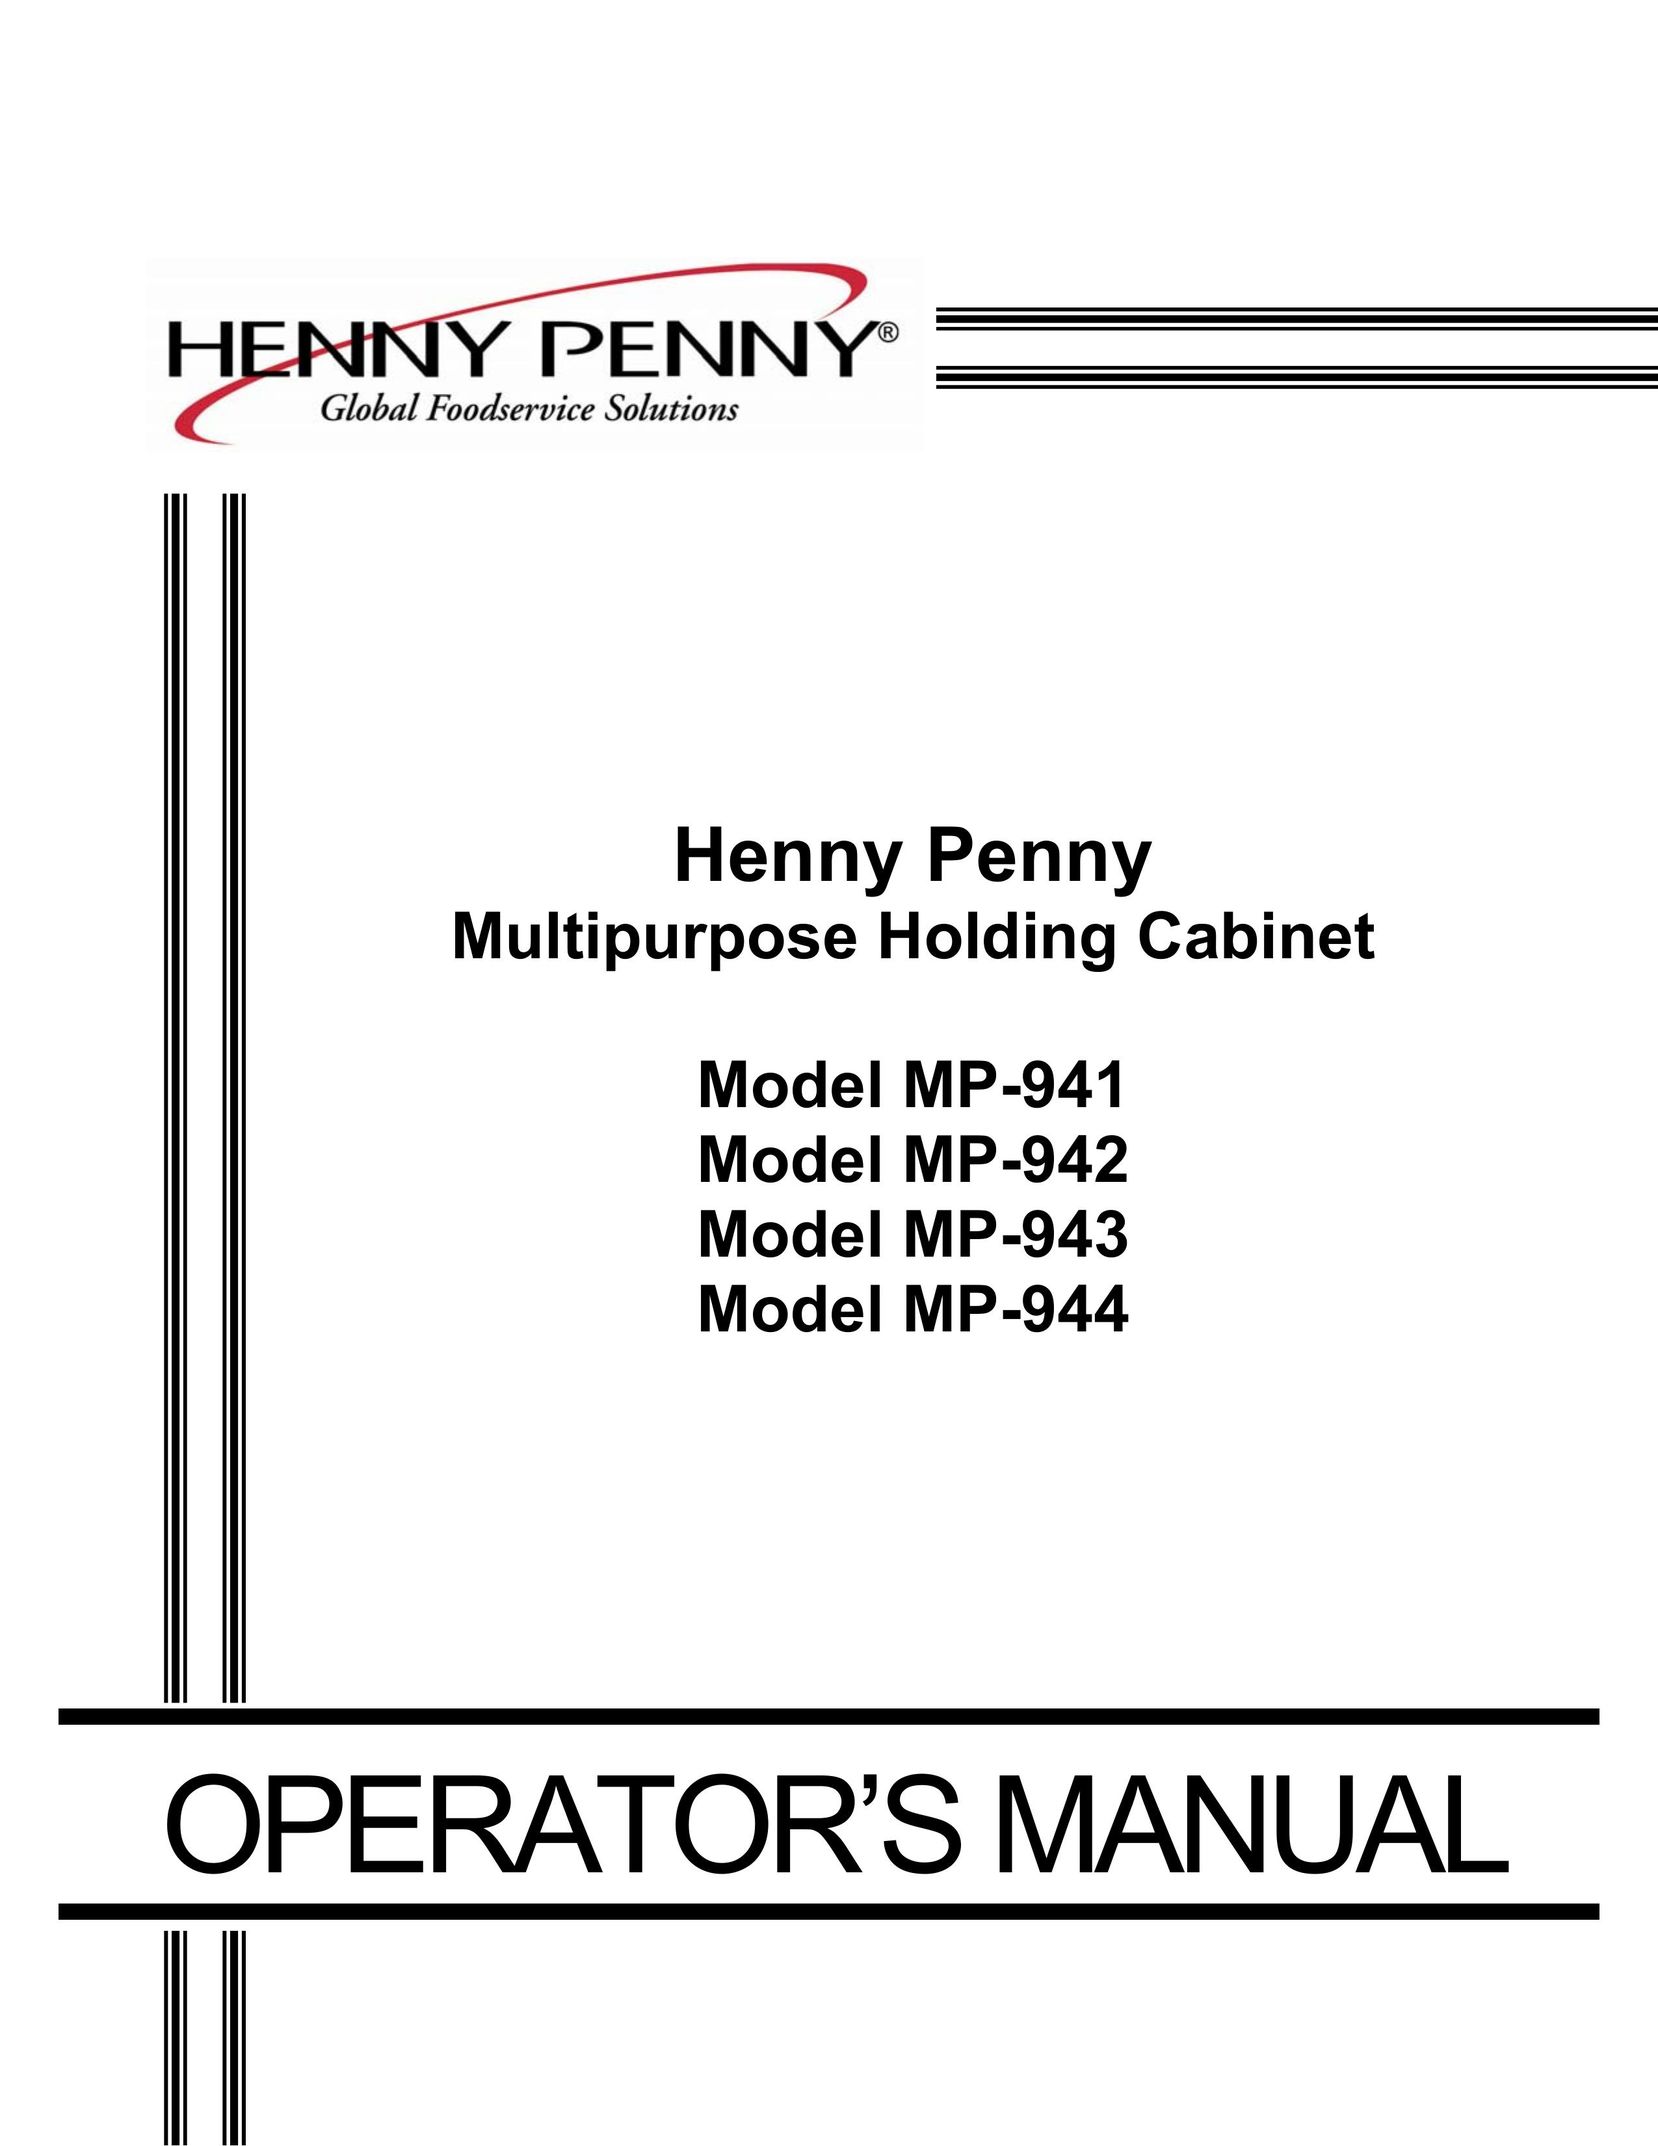 Henny Penny MP-944 Food Warmer User Manual